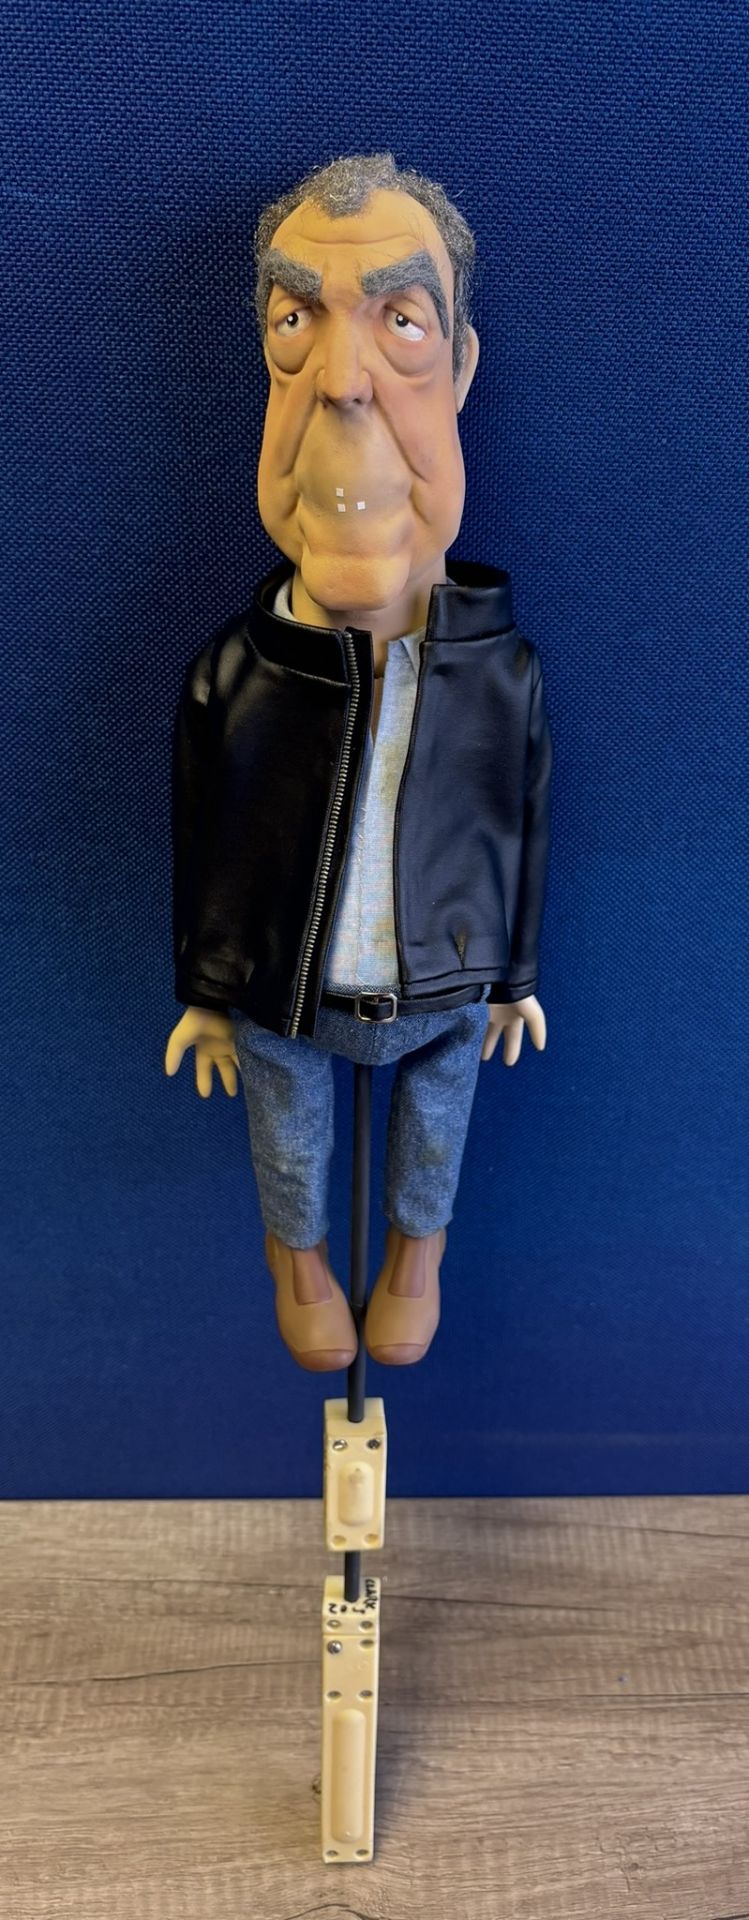 Newzoid puppet - Jeremy Clarkson - Image 3 of 3